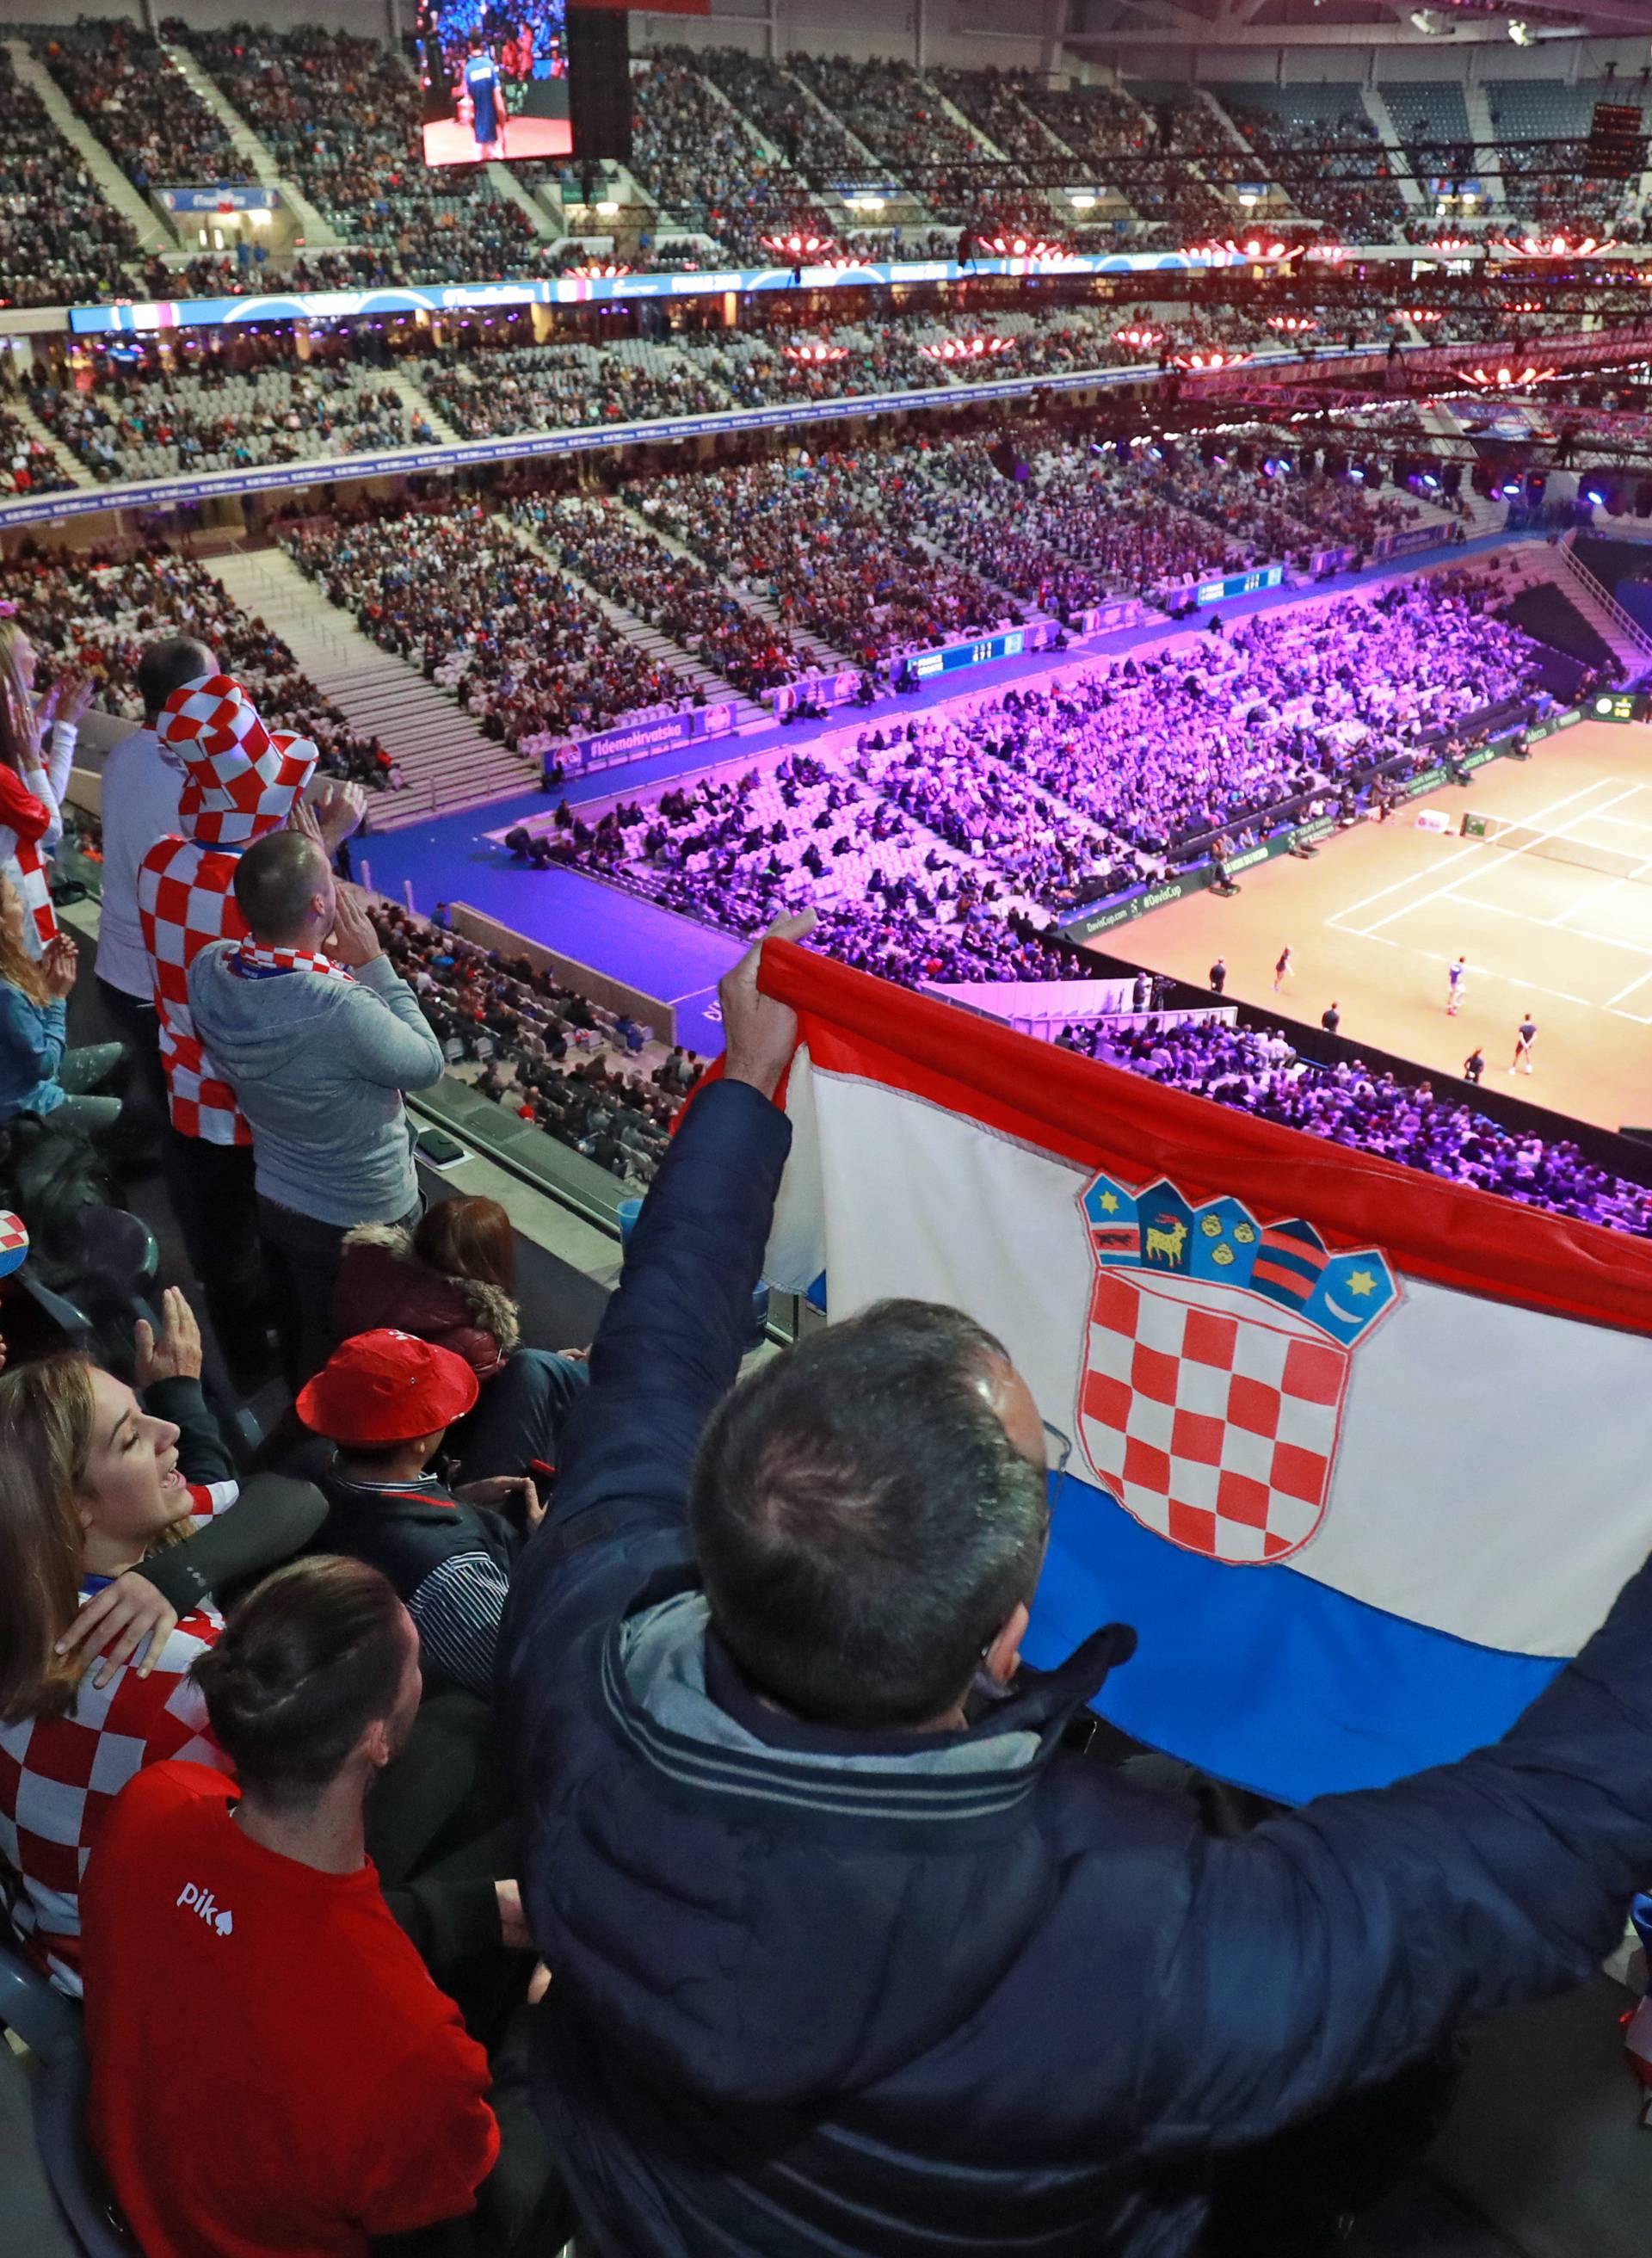 Lille: U 2. mecu finala Davis Cupa sastali se Jo-Wilfred Tsonga i Marin Cilic